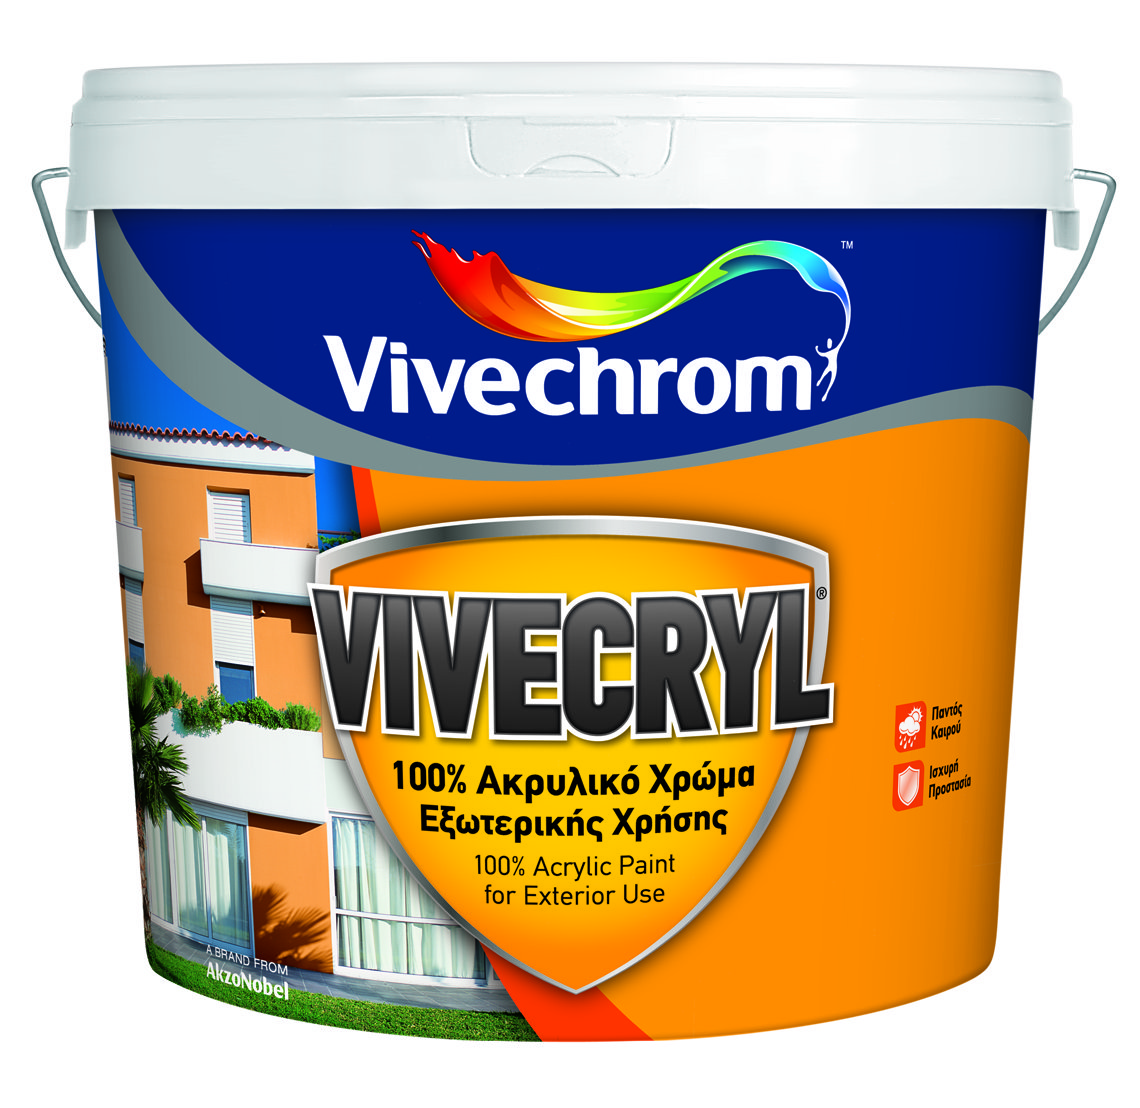 Vivechrom Vivecryl Ακρυλικό Οικολογικό Χρώμα Matt Finish Βάση D 1L